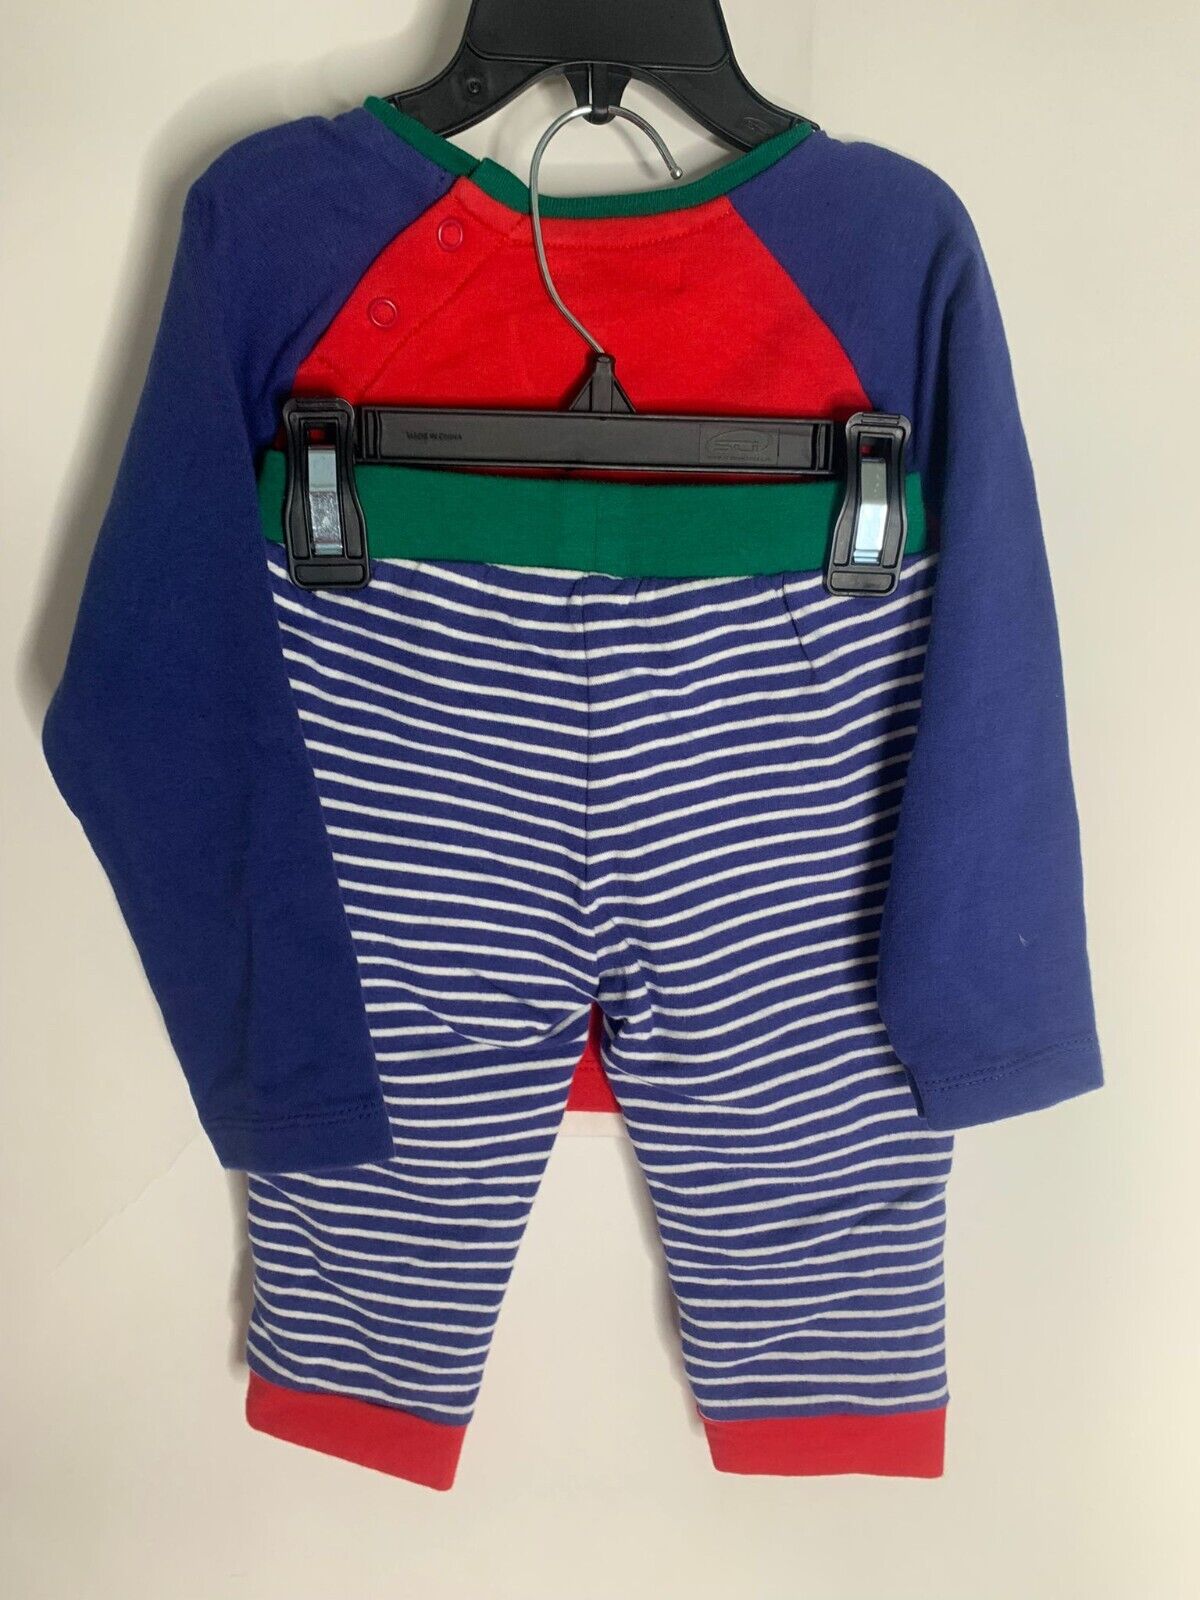 Baby Mini Boden Toddler Snowman Applique Long Sleeve T-Shirt Joggers Set Pants